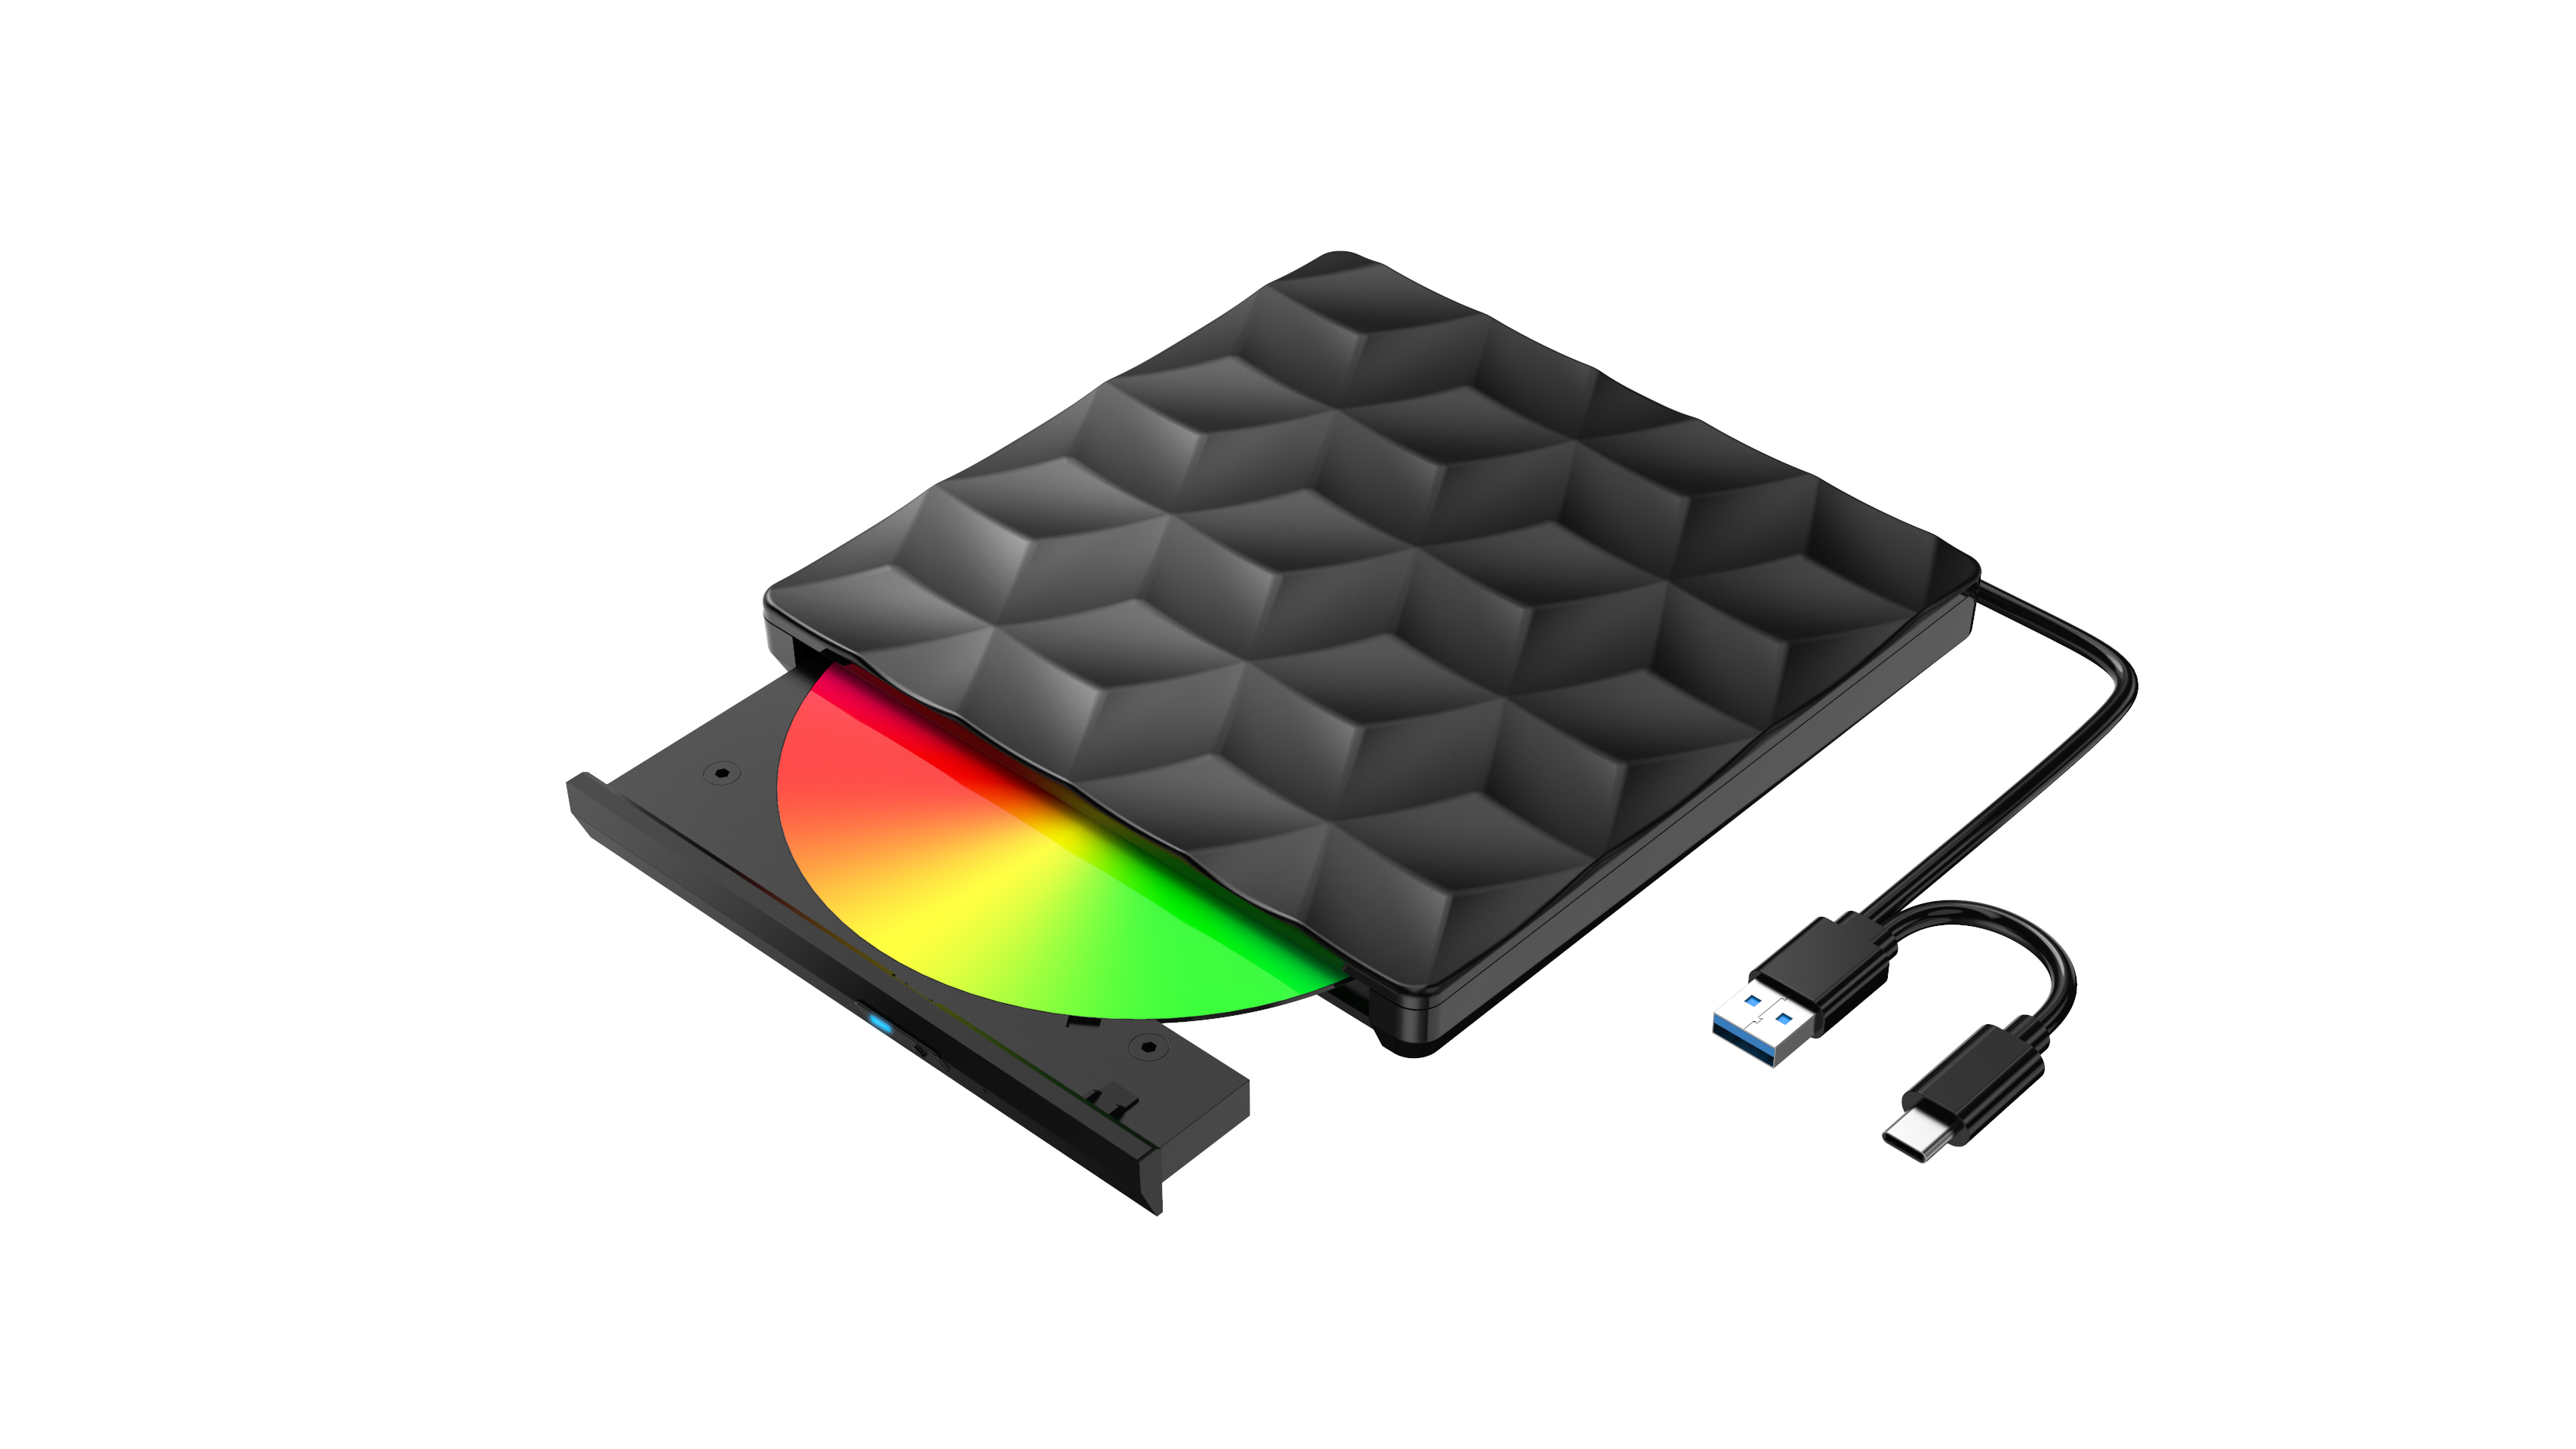 Tpye-C-USB-30-Combo-External-Optical-Drive-DVD-Player-Burner-for-PCNotebook-In-HomeOutdoorWork-Rhomb-1750093